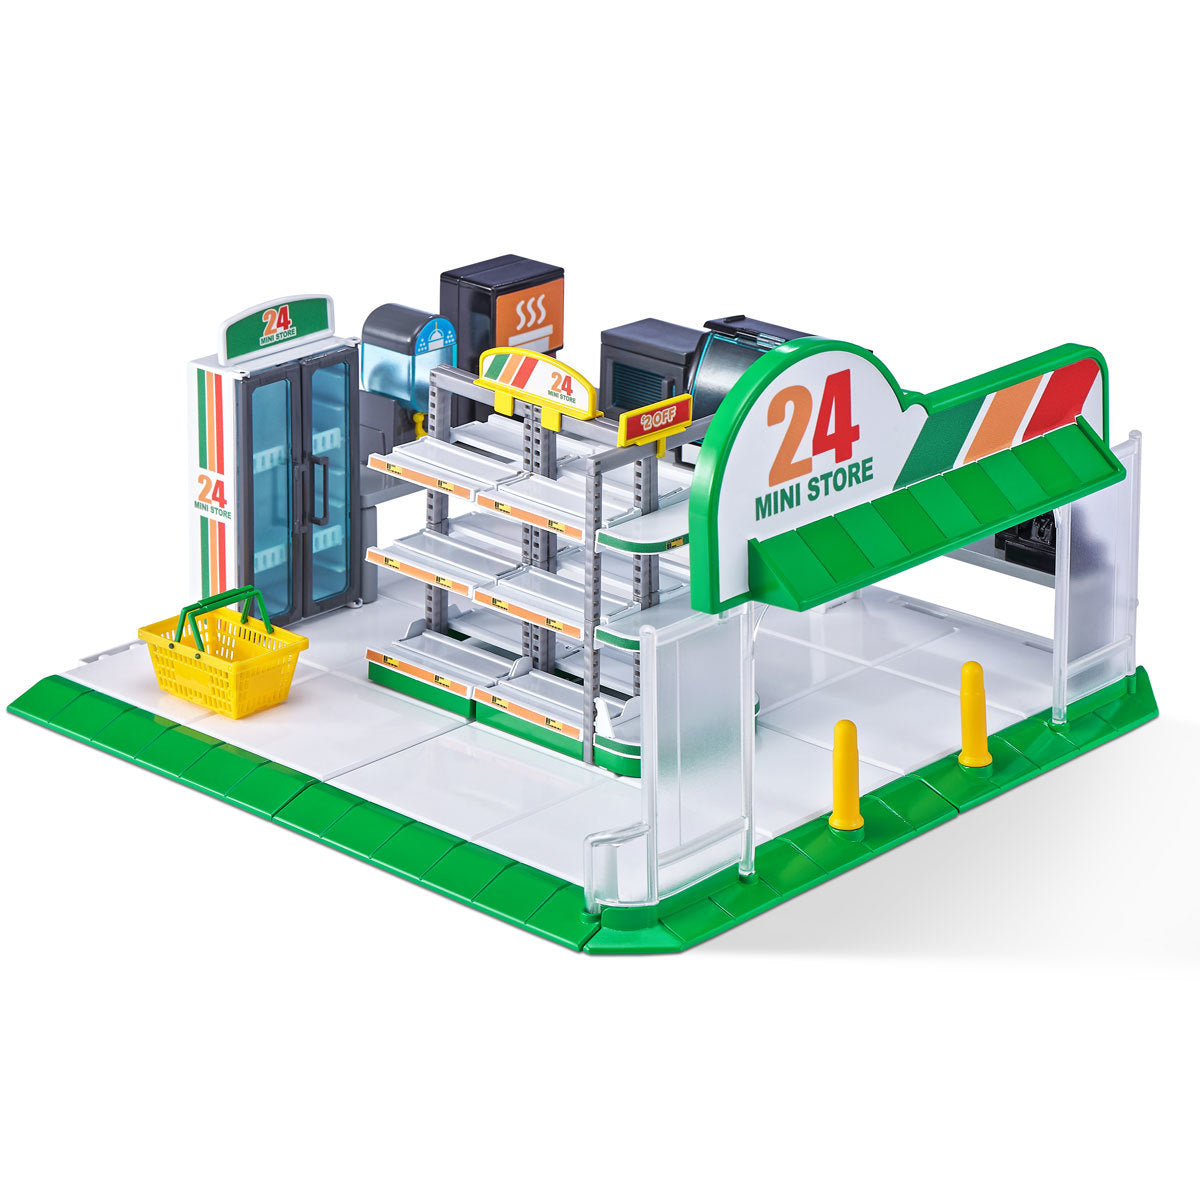 5 Surprise Mini Brands Convenience Store Playset by ZURU